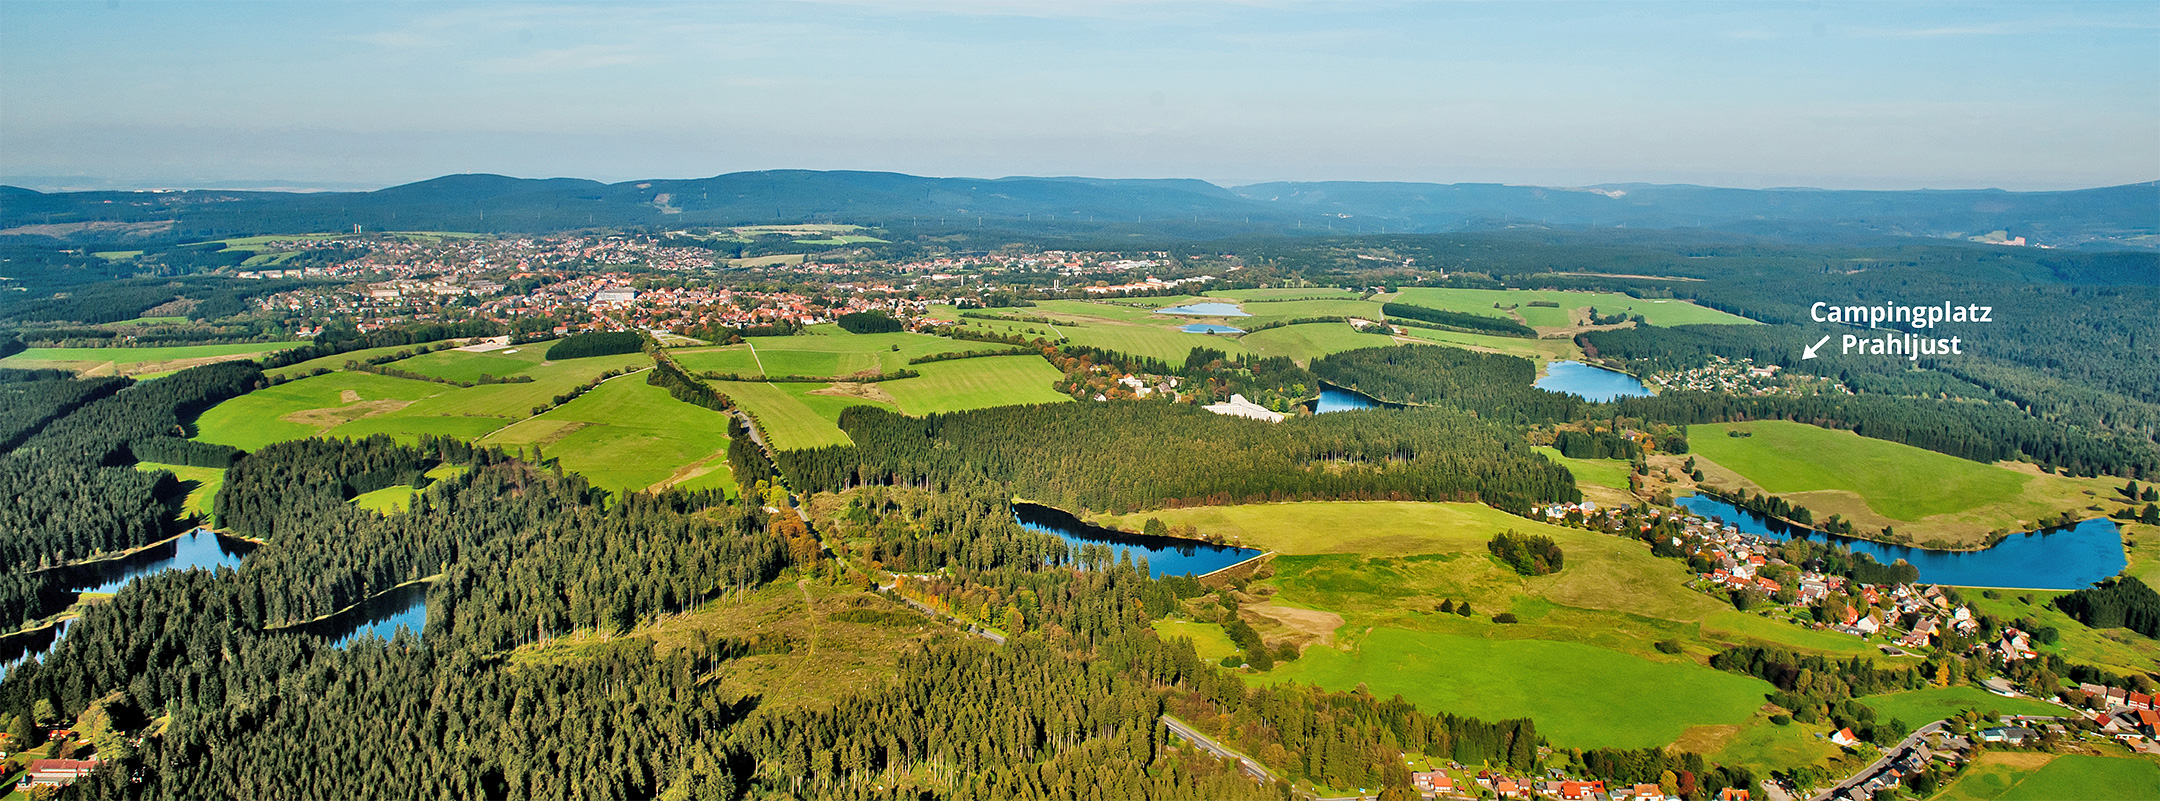 Panoramabild Luftaufnahme bei Clausthal-Zellerfeld im Oberharz mit Campingplatz Prahljust